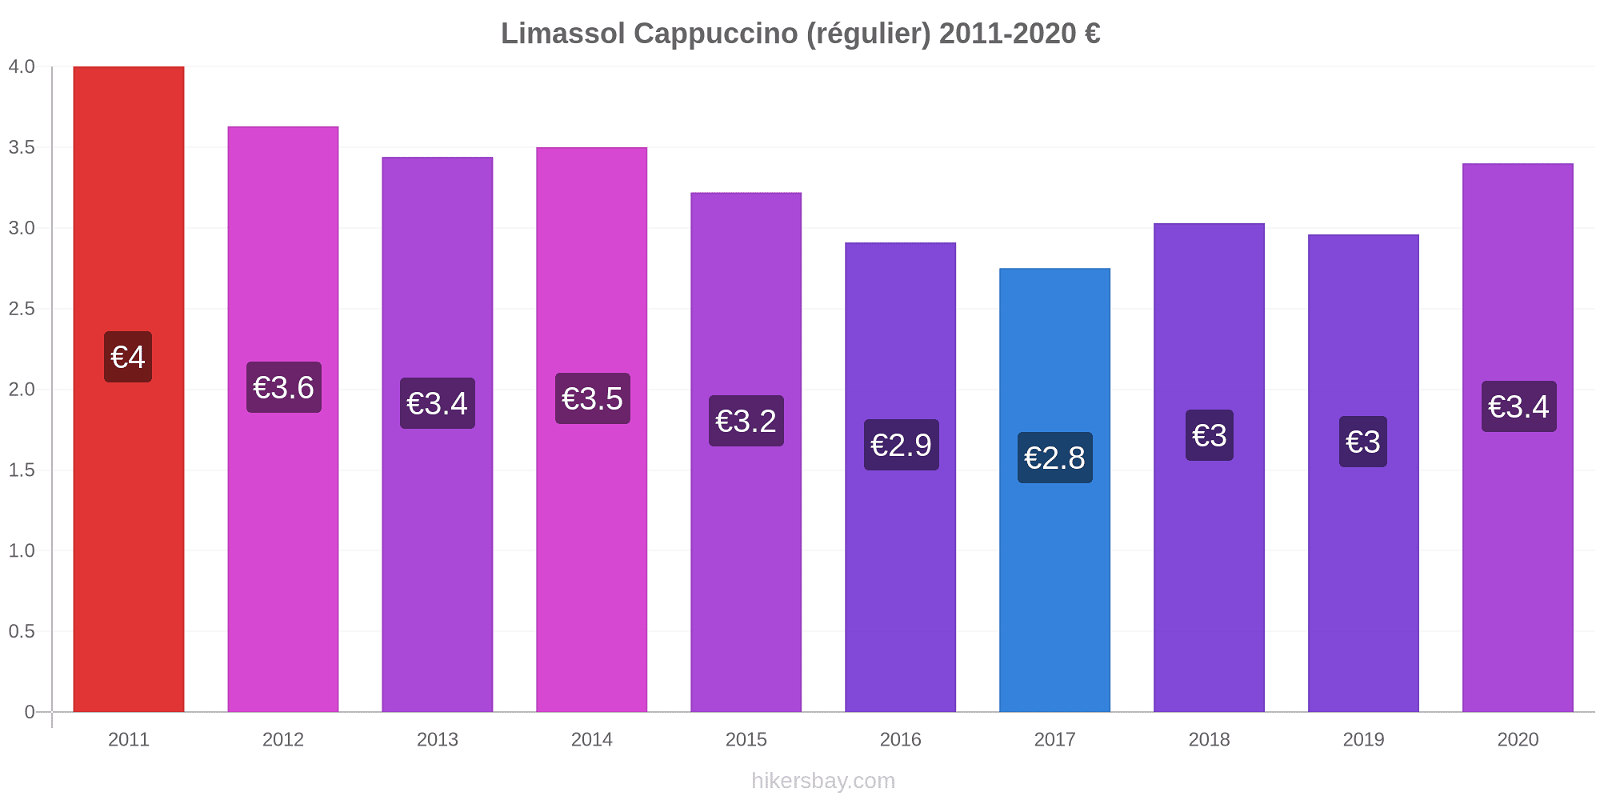 Limassol changements de prix Cappuccino (régulier) hikersbay.com